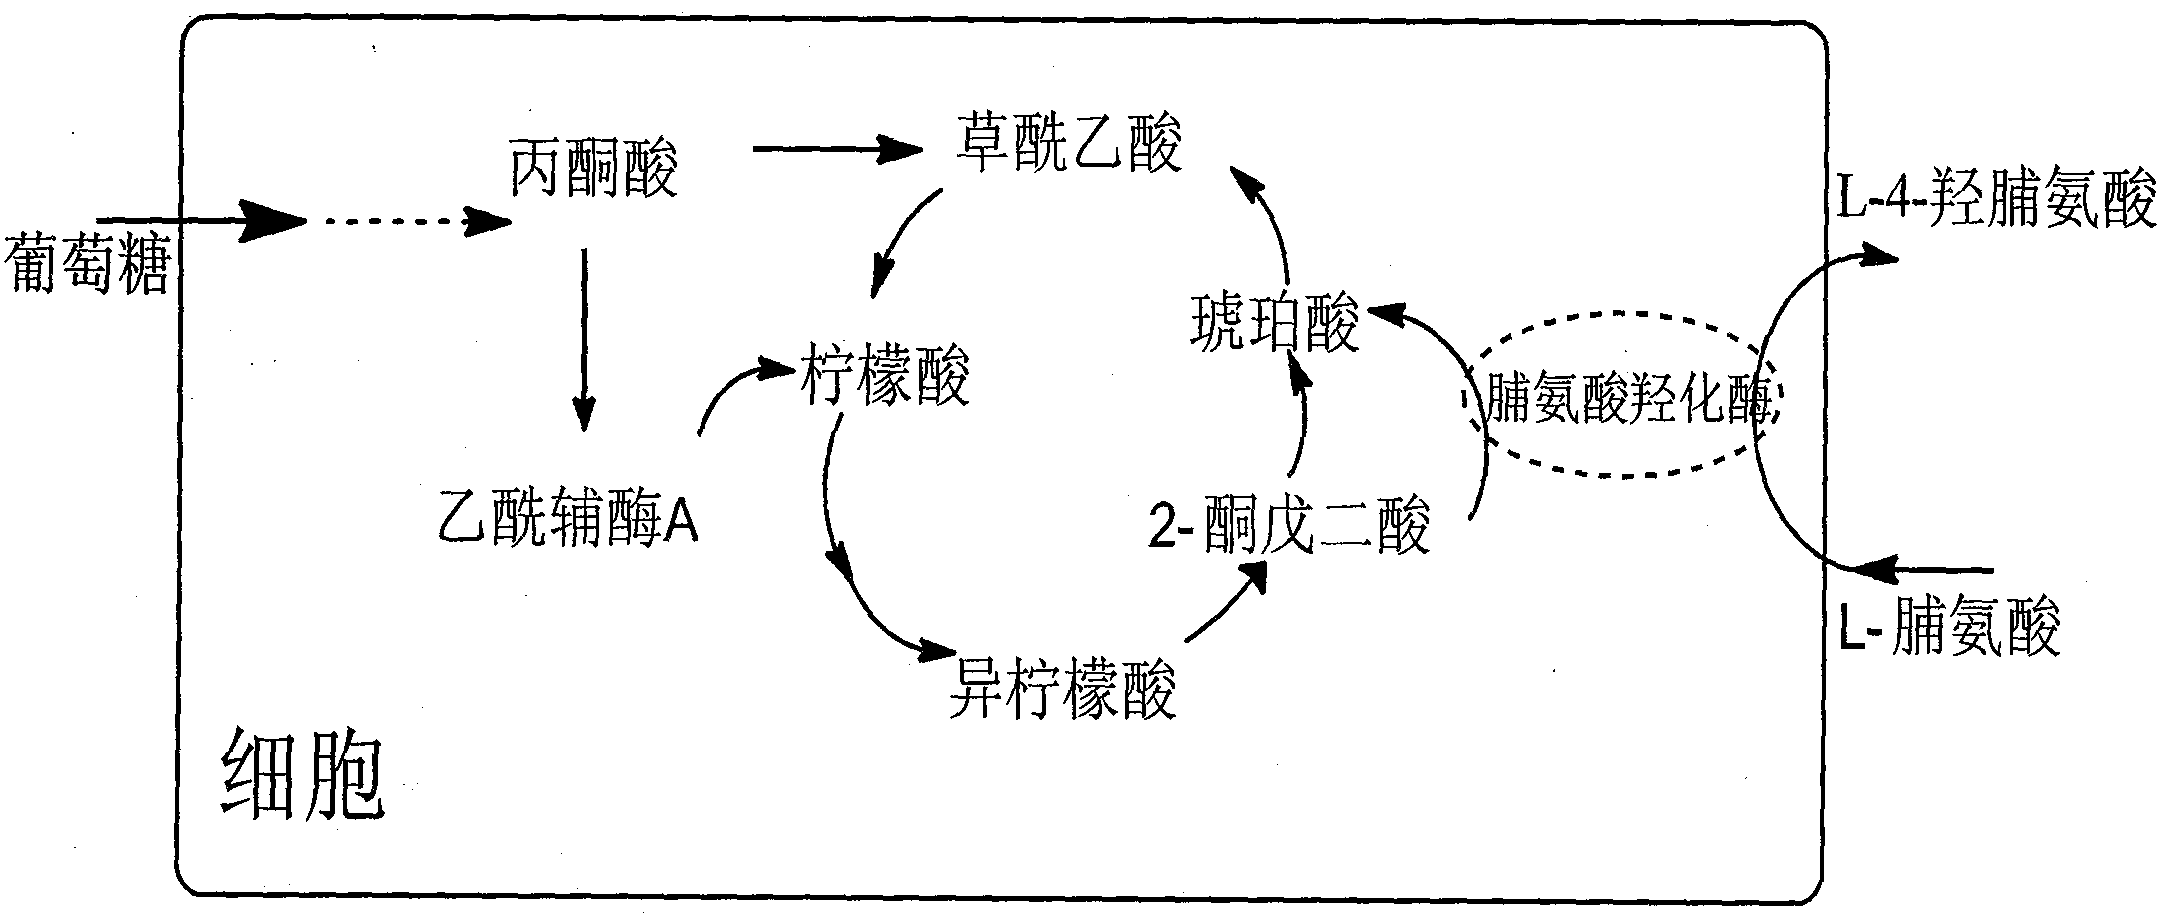 Method for production of L-4-hydroxyproline by using recombinant escherichia coli fermentation